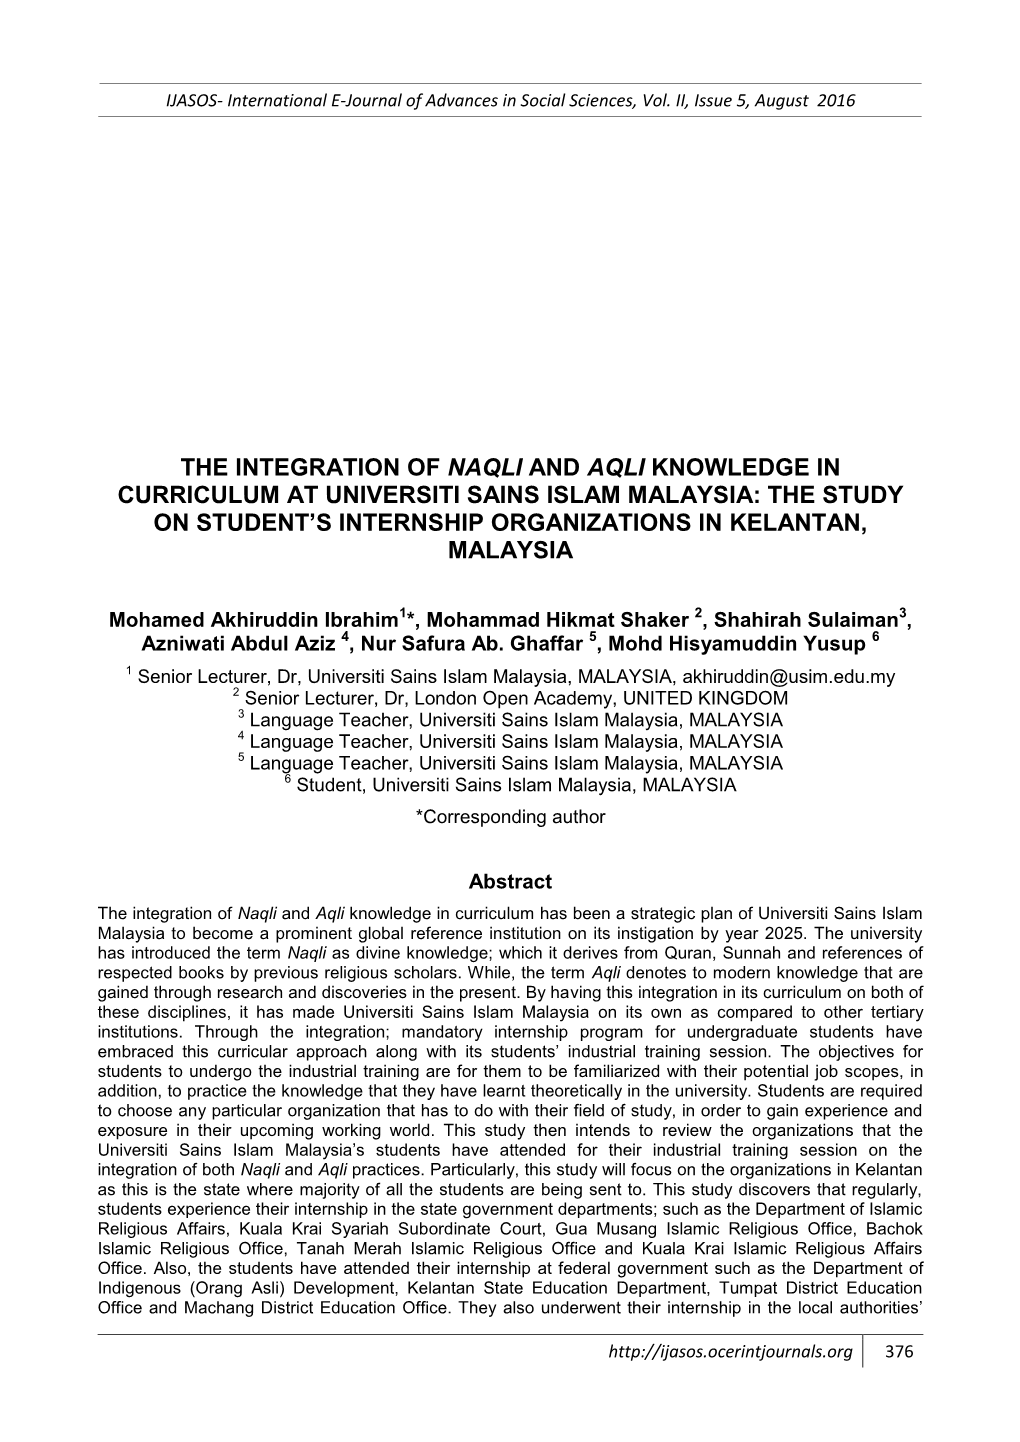 The Integration of Naqli and Aqli Knowledge in Curriculum at Universiti Sains Islam Malaysia: the Study on Student’S Internship Organizations in Kelantan, Malaysia